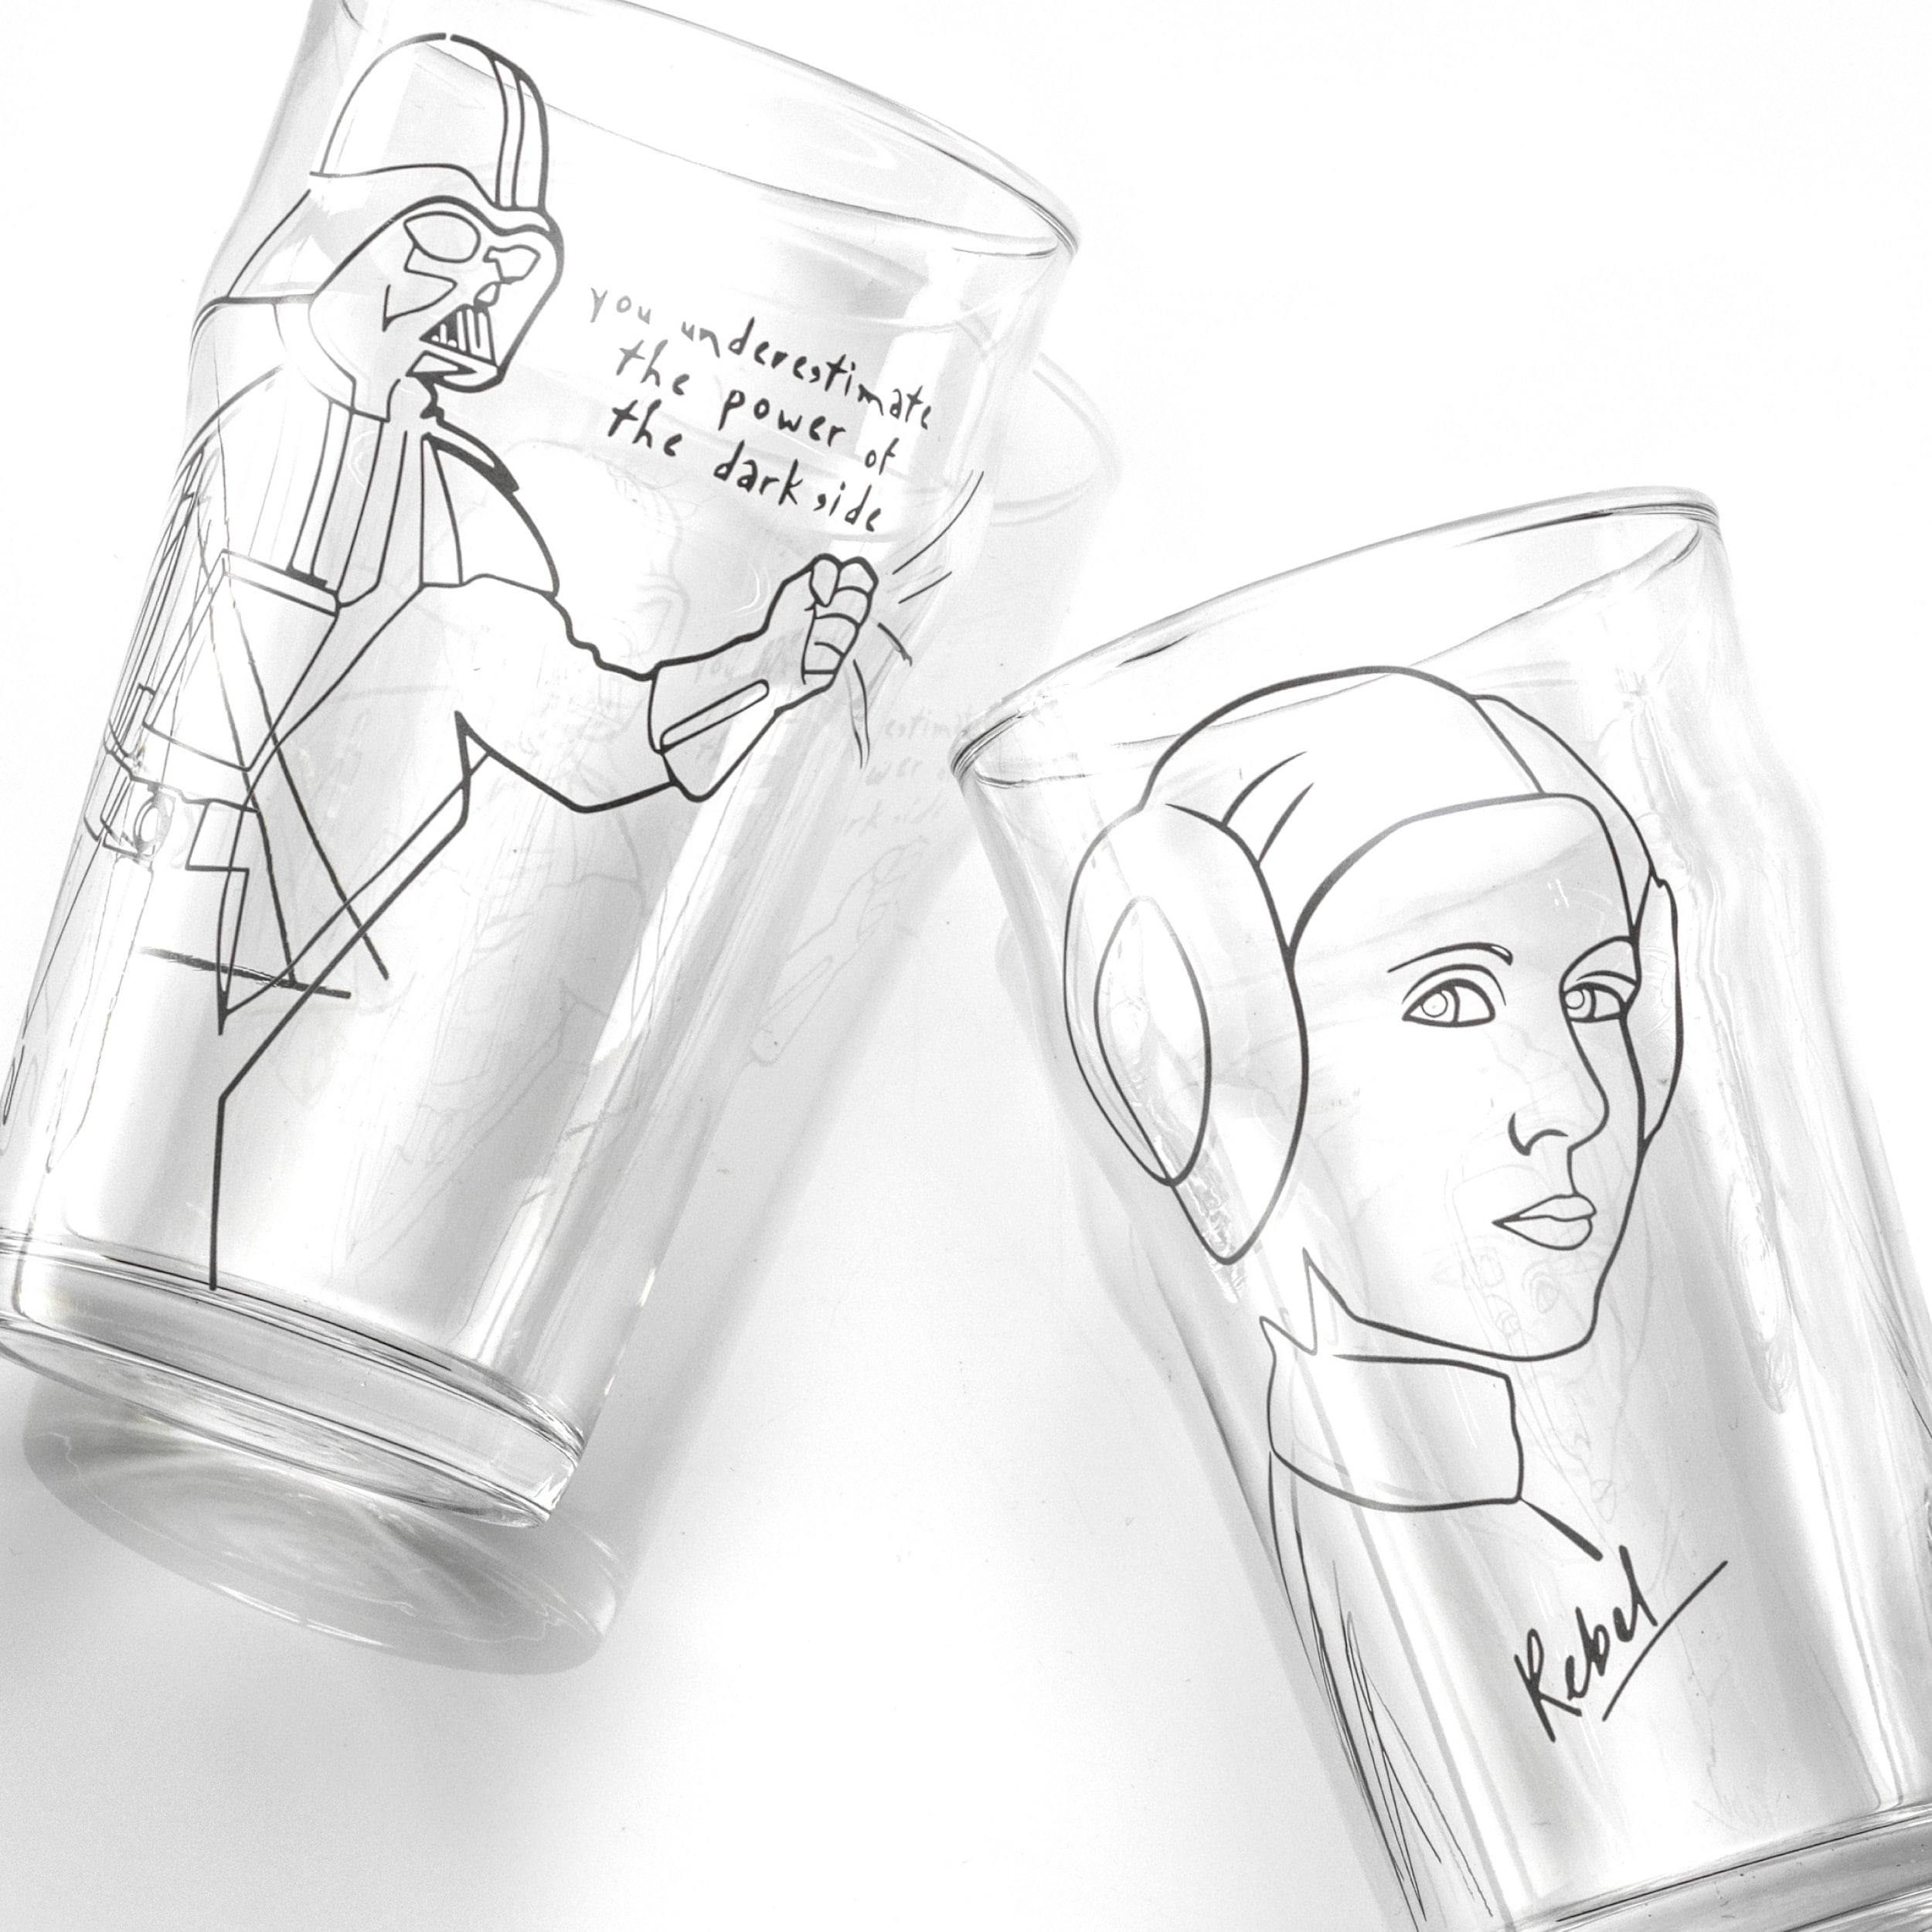 JoyJolt Star Wars 10-fl oz Glass Clear/Blue Goblet Set of: 2 in the  Drinkware department at